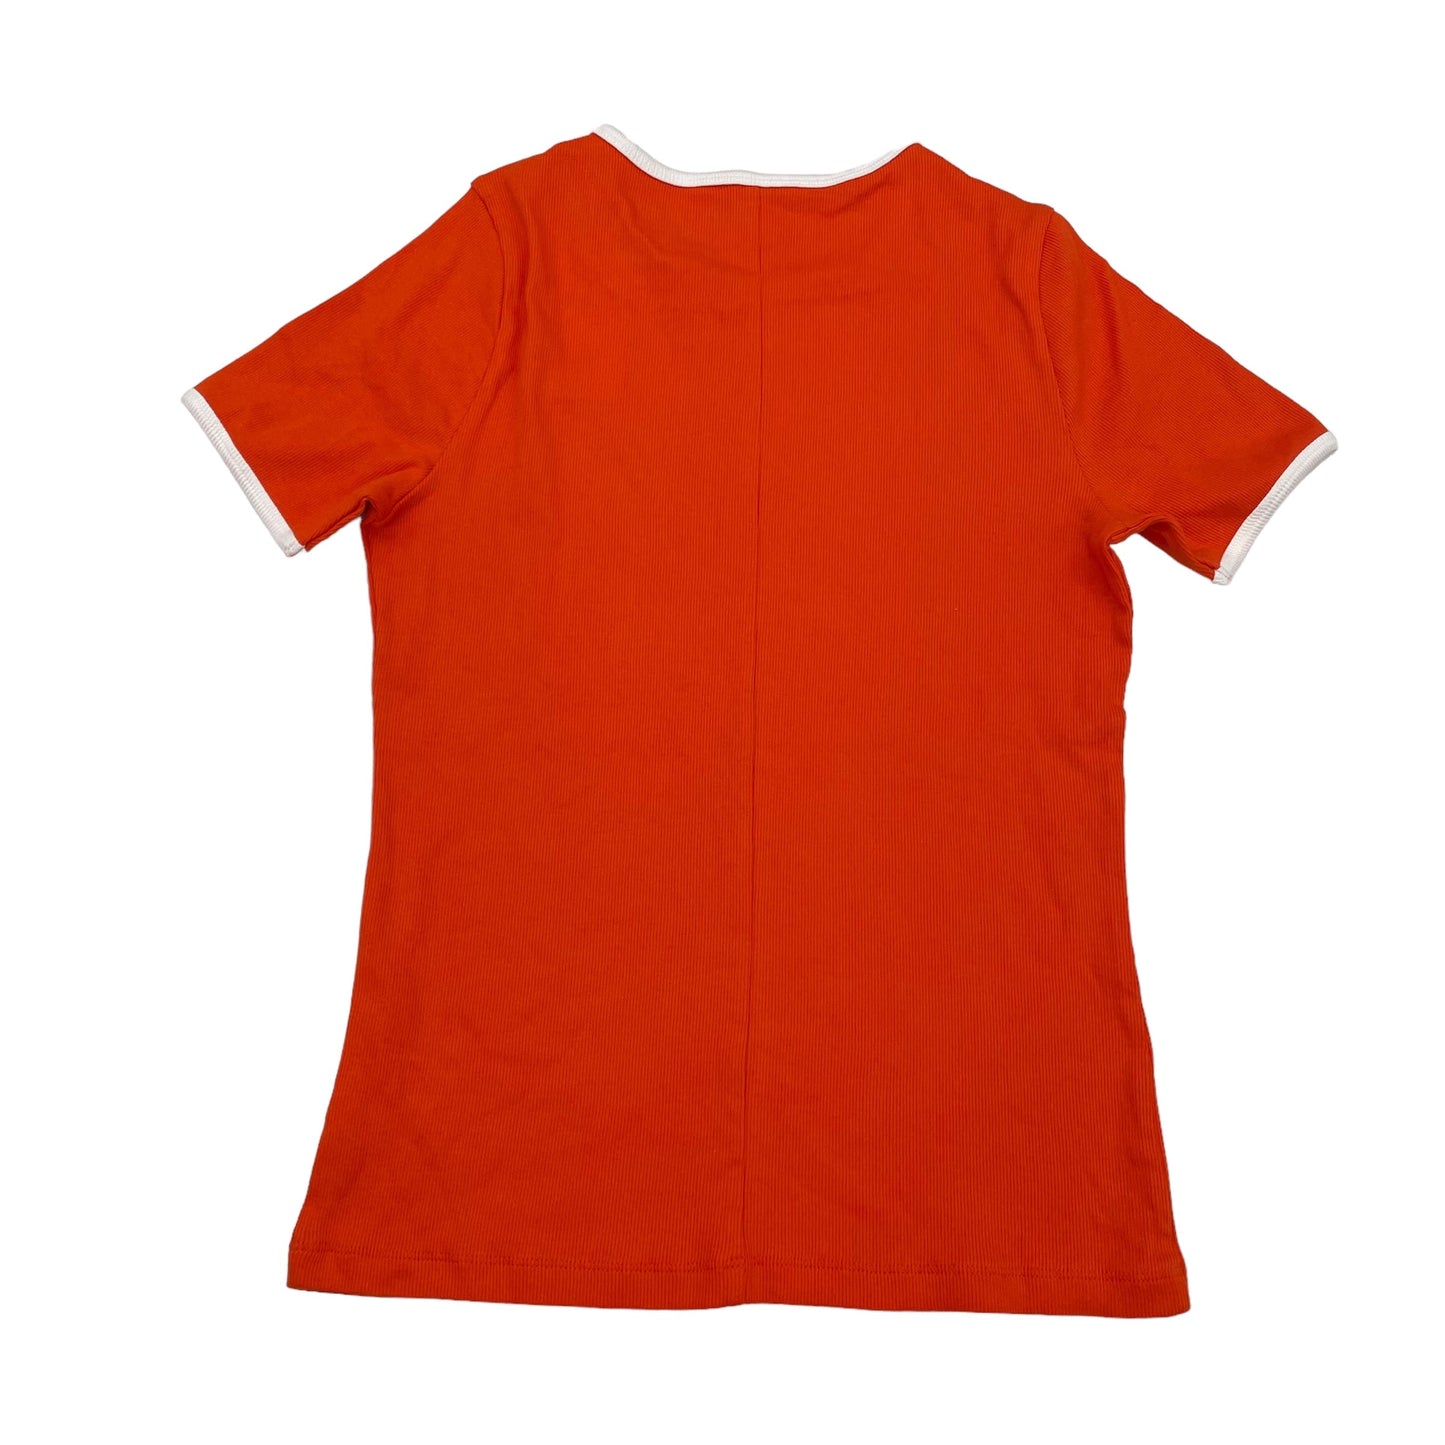 Orange Top Short Sleeve Free Assembly, Size L